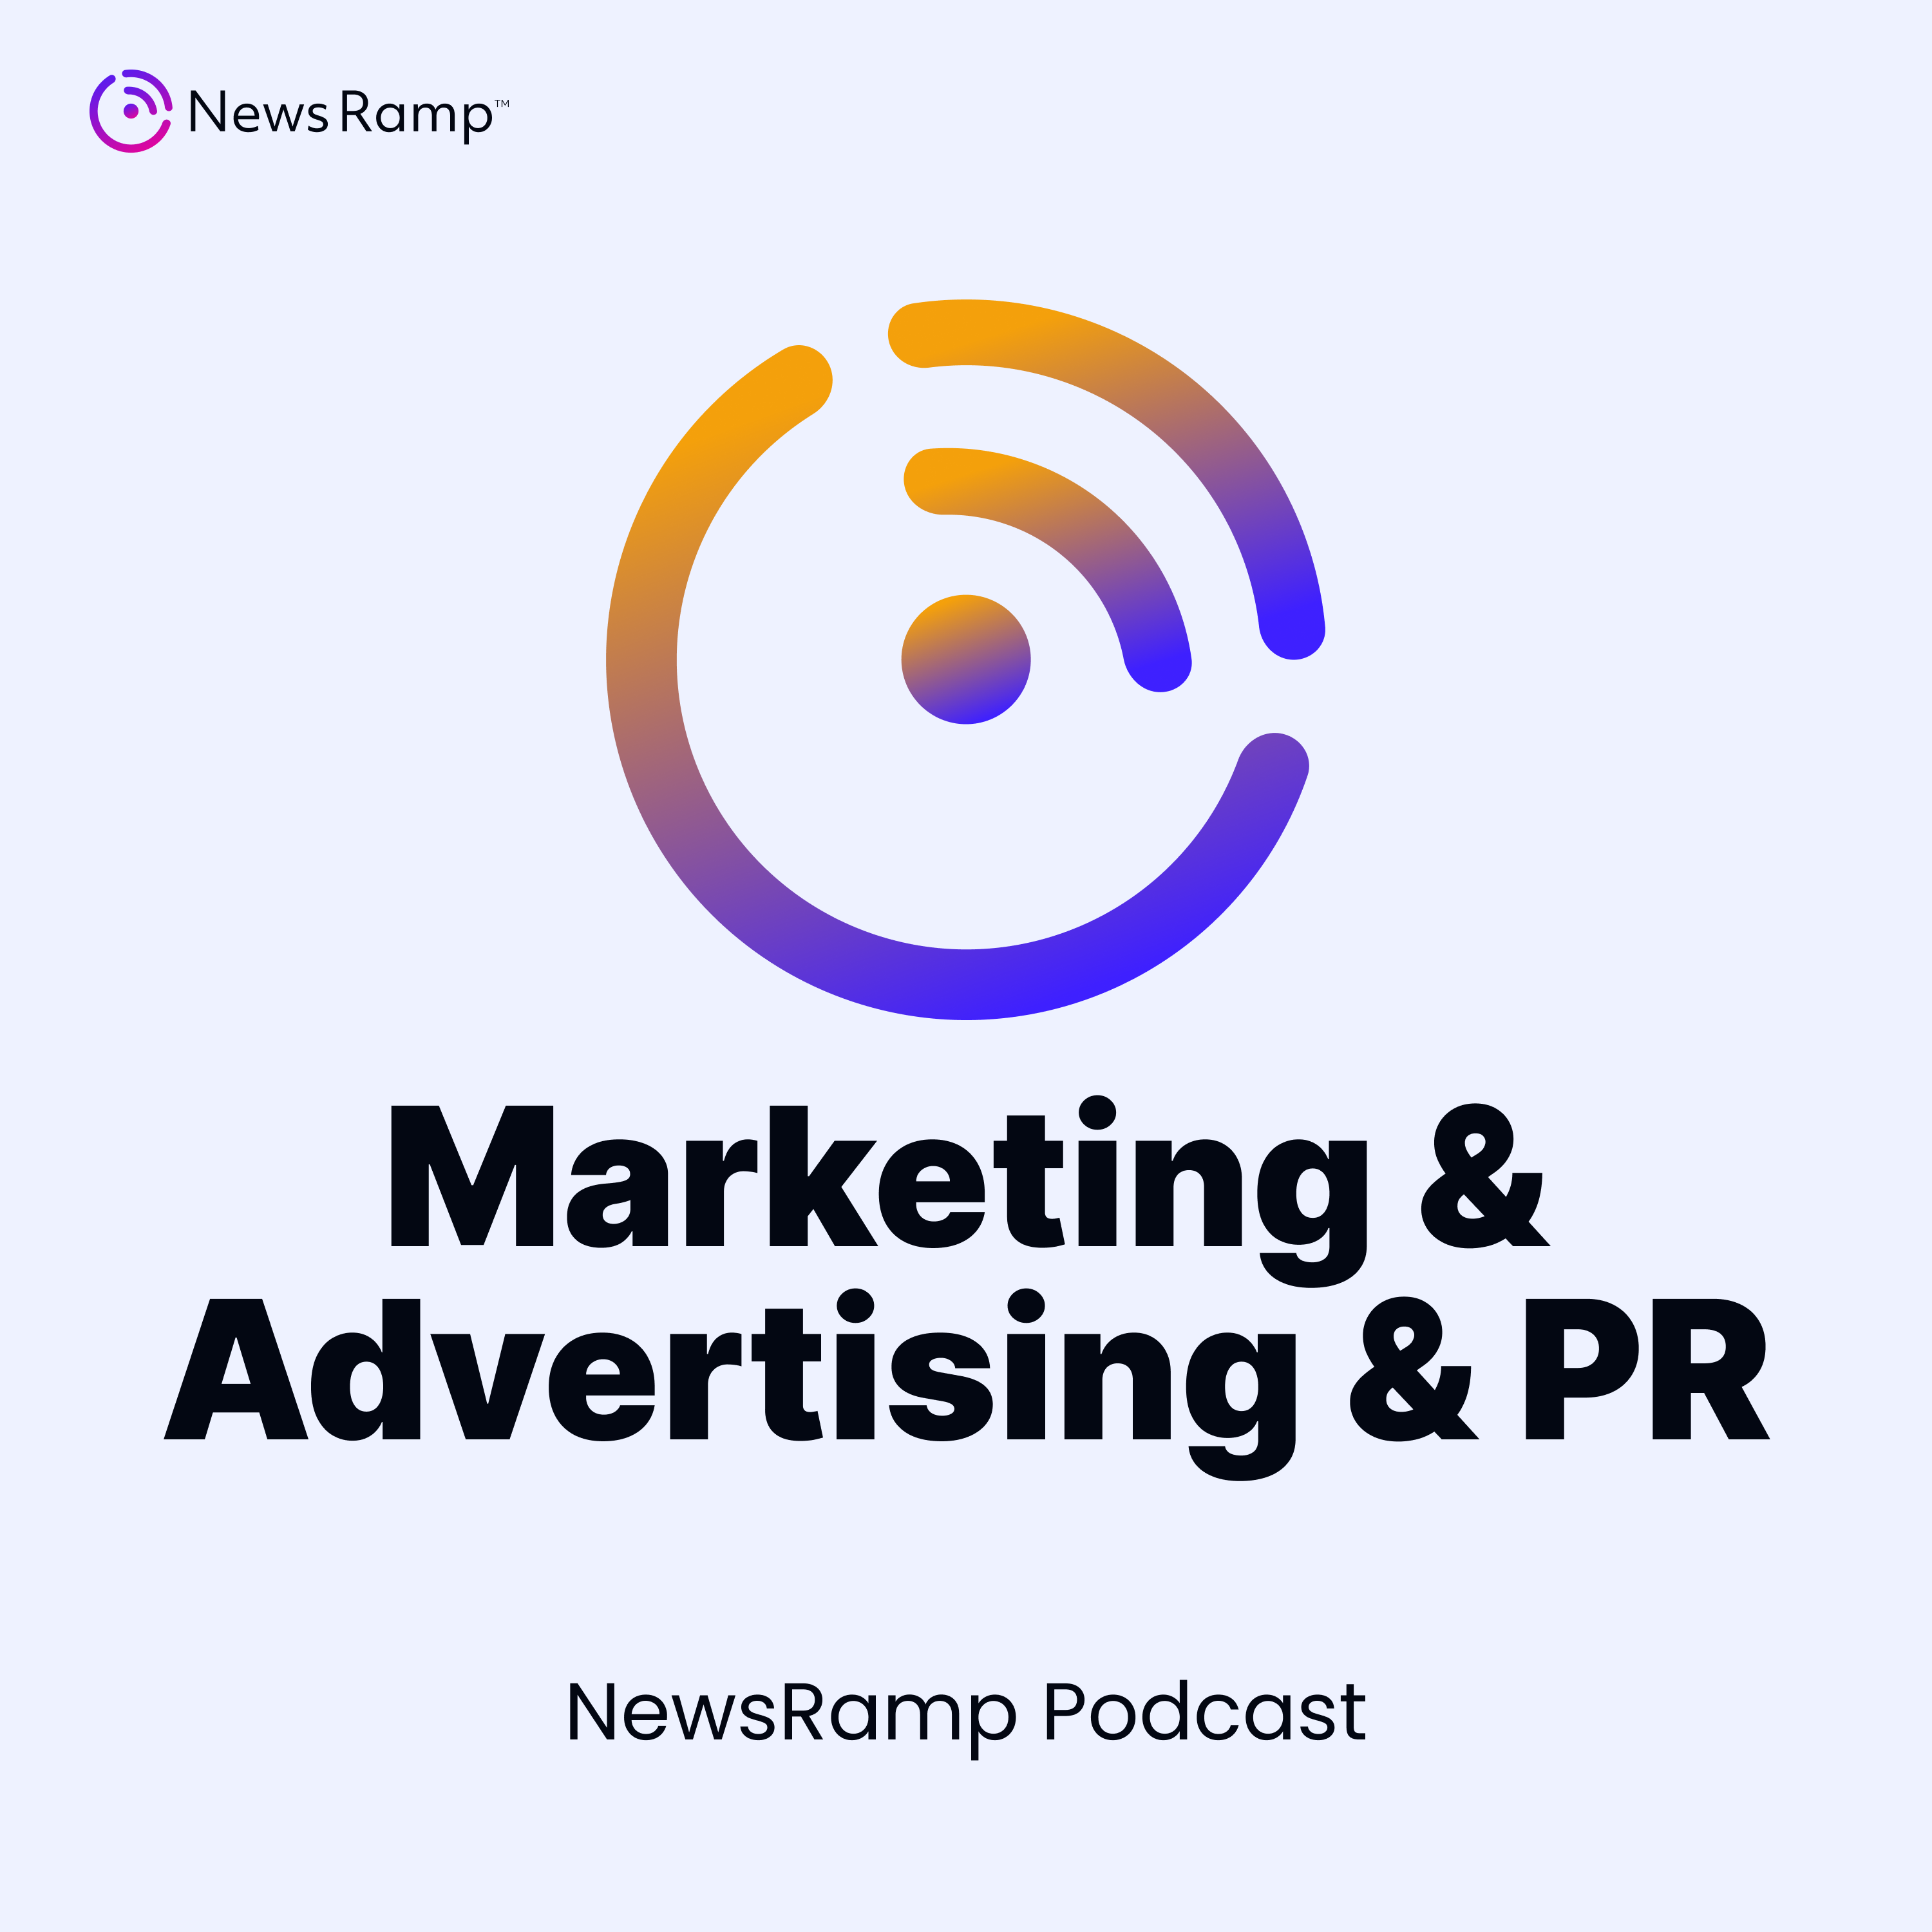 NewsRamp Marketing, Advertising & PR Podcast